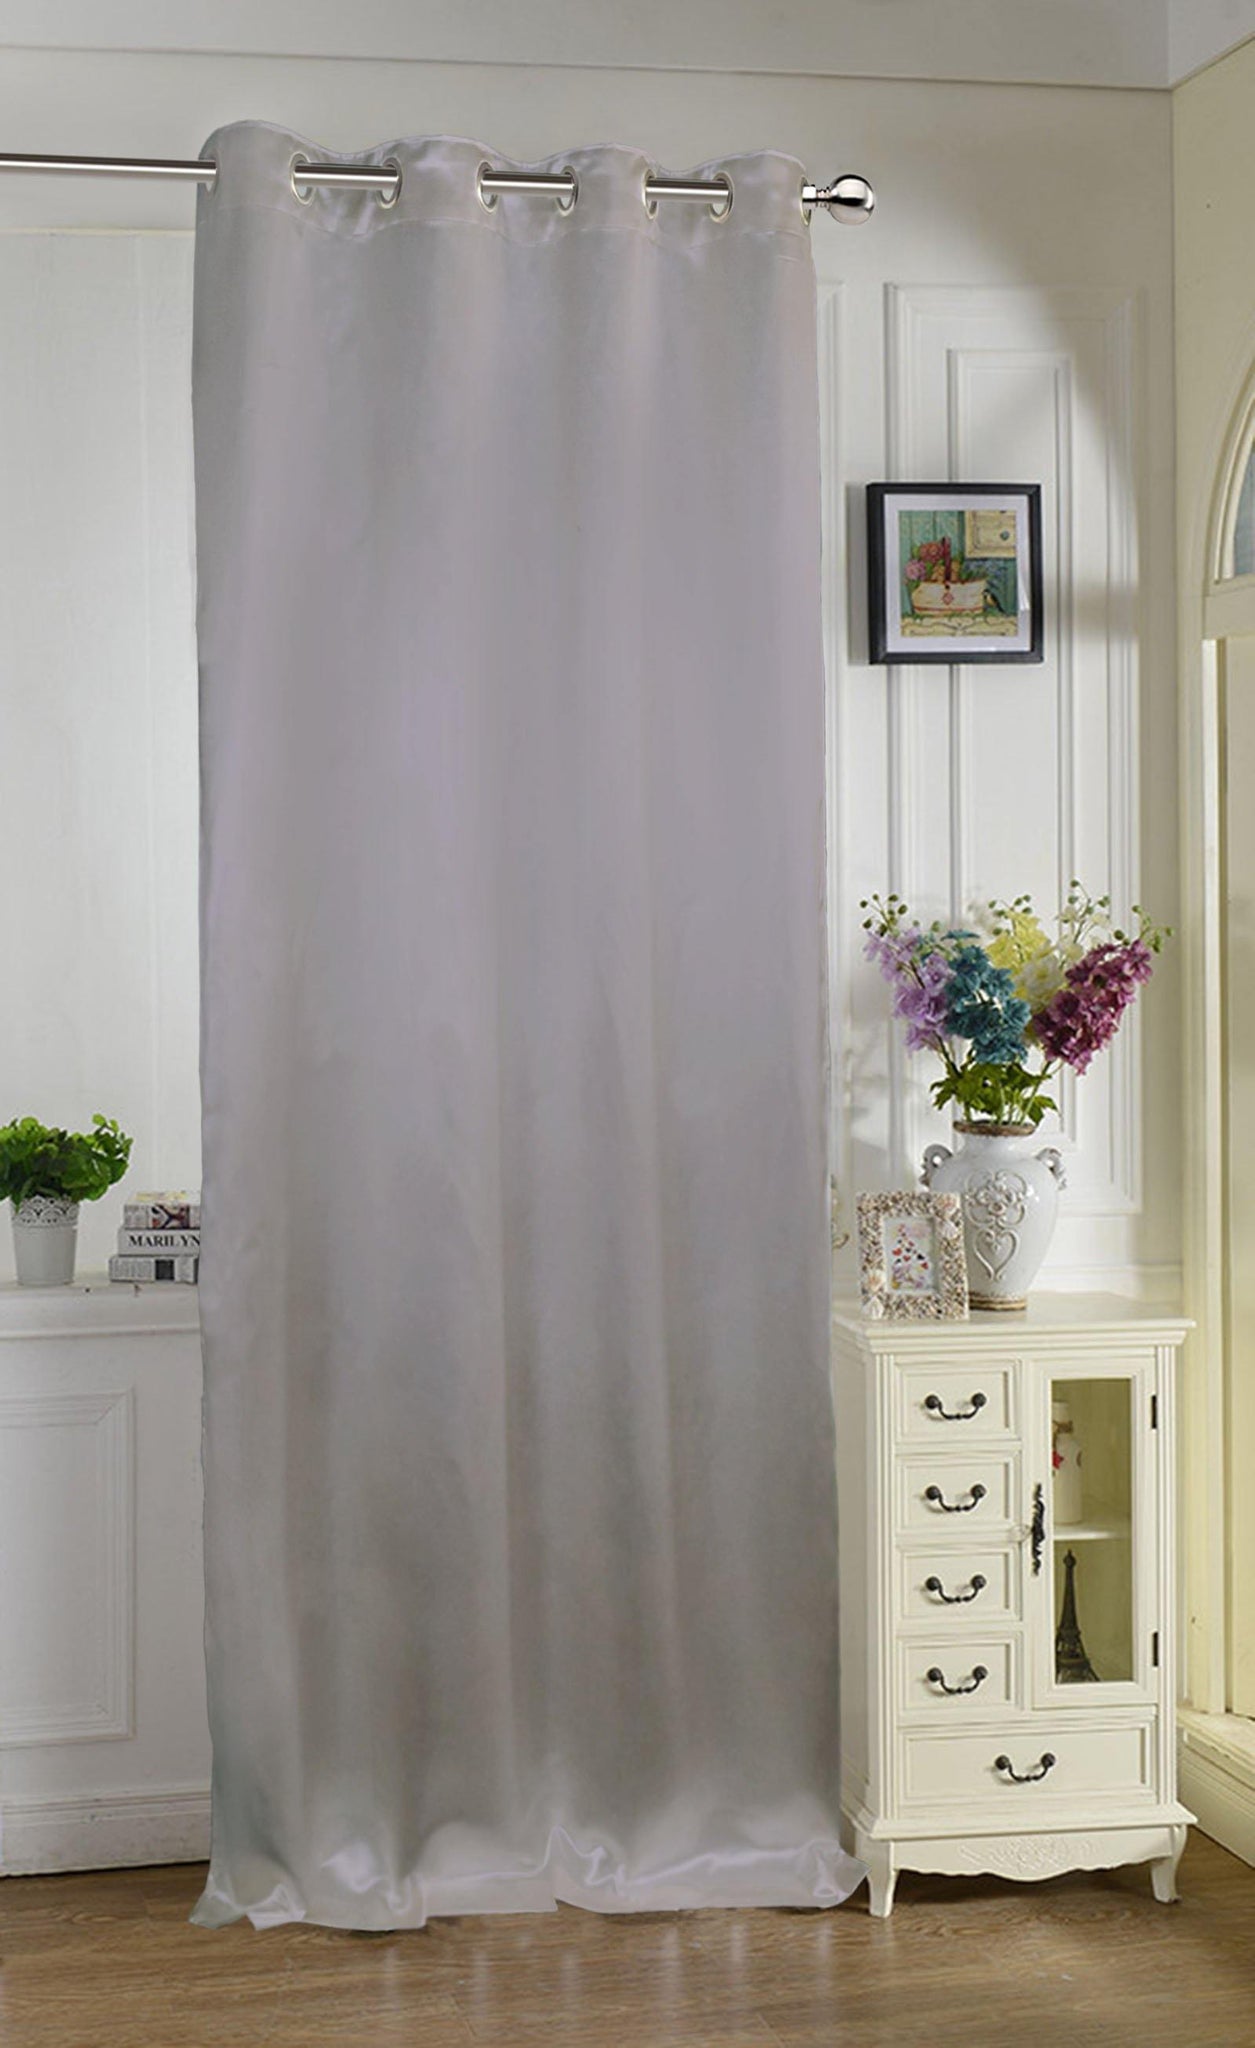 Lushomes Grey Contemporary Premium Plain Long Door Curtain with 8 metal Eyelets (54 x 108‰۝)-Torantina, Single pc - Lushomes